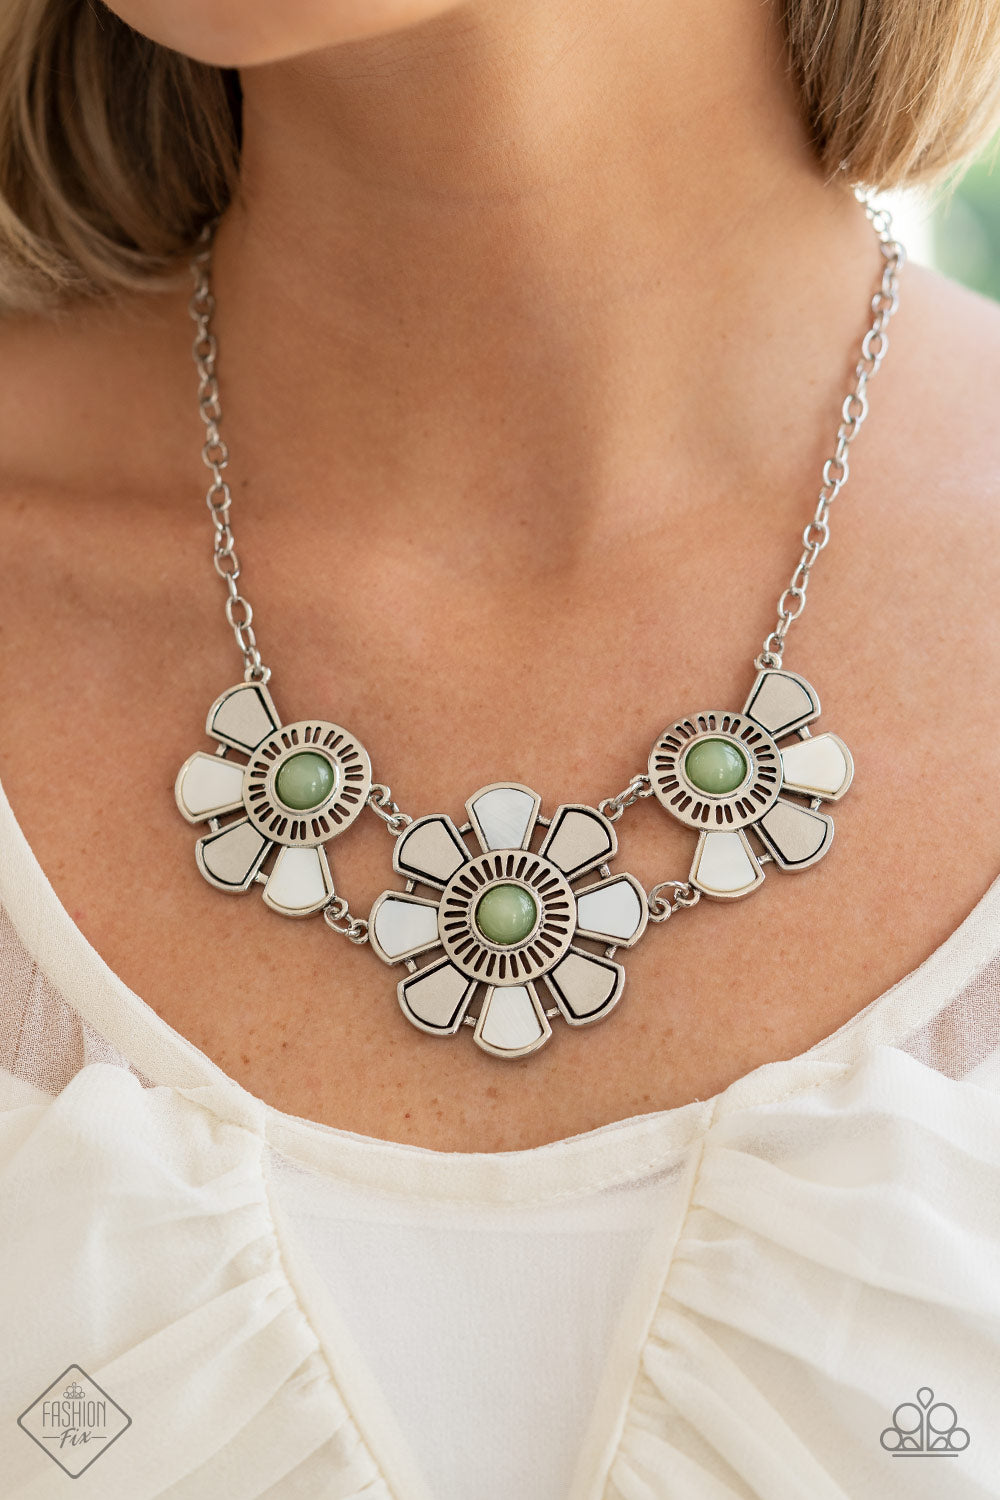 Aquatic Garden- Green and Silver Necklace- Paparazzi Accessories